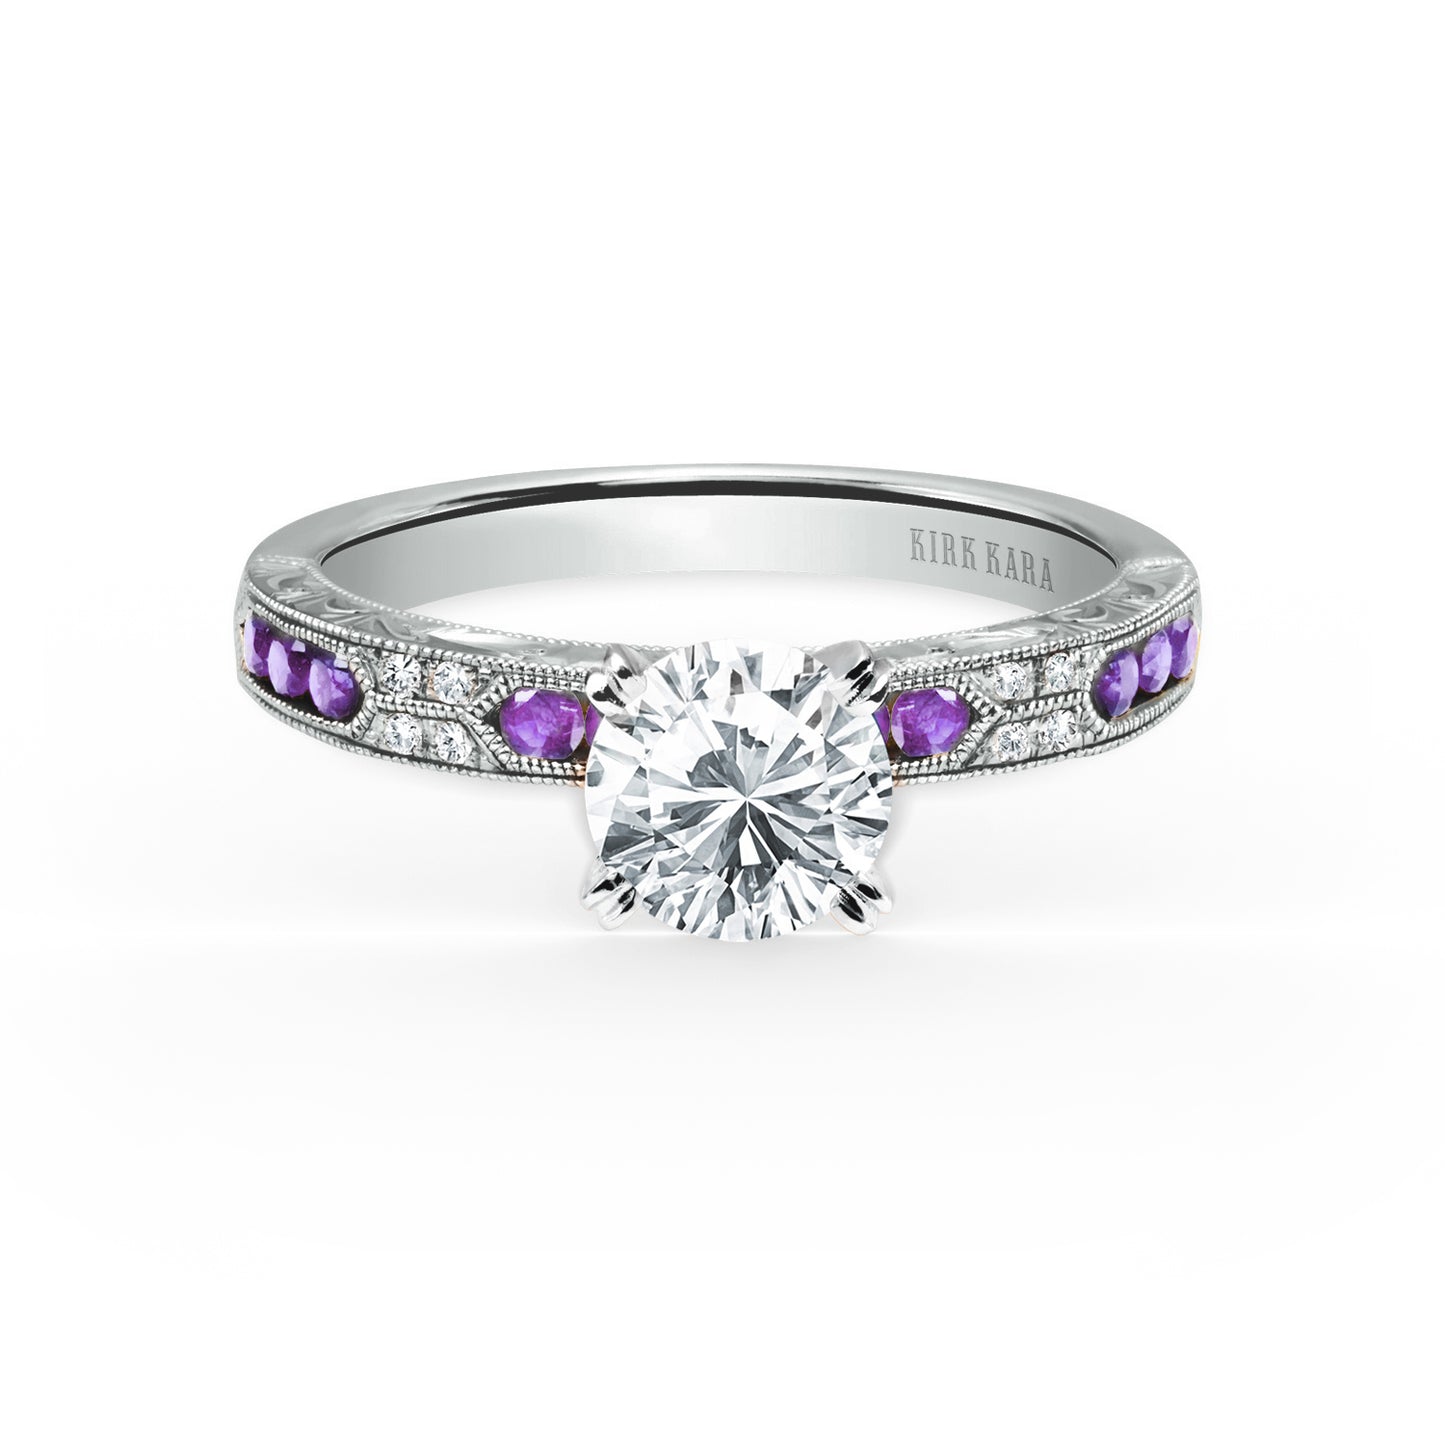 Channel Set Artful Amethyst Diamond Engagement Ring